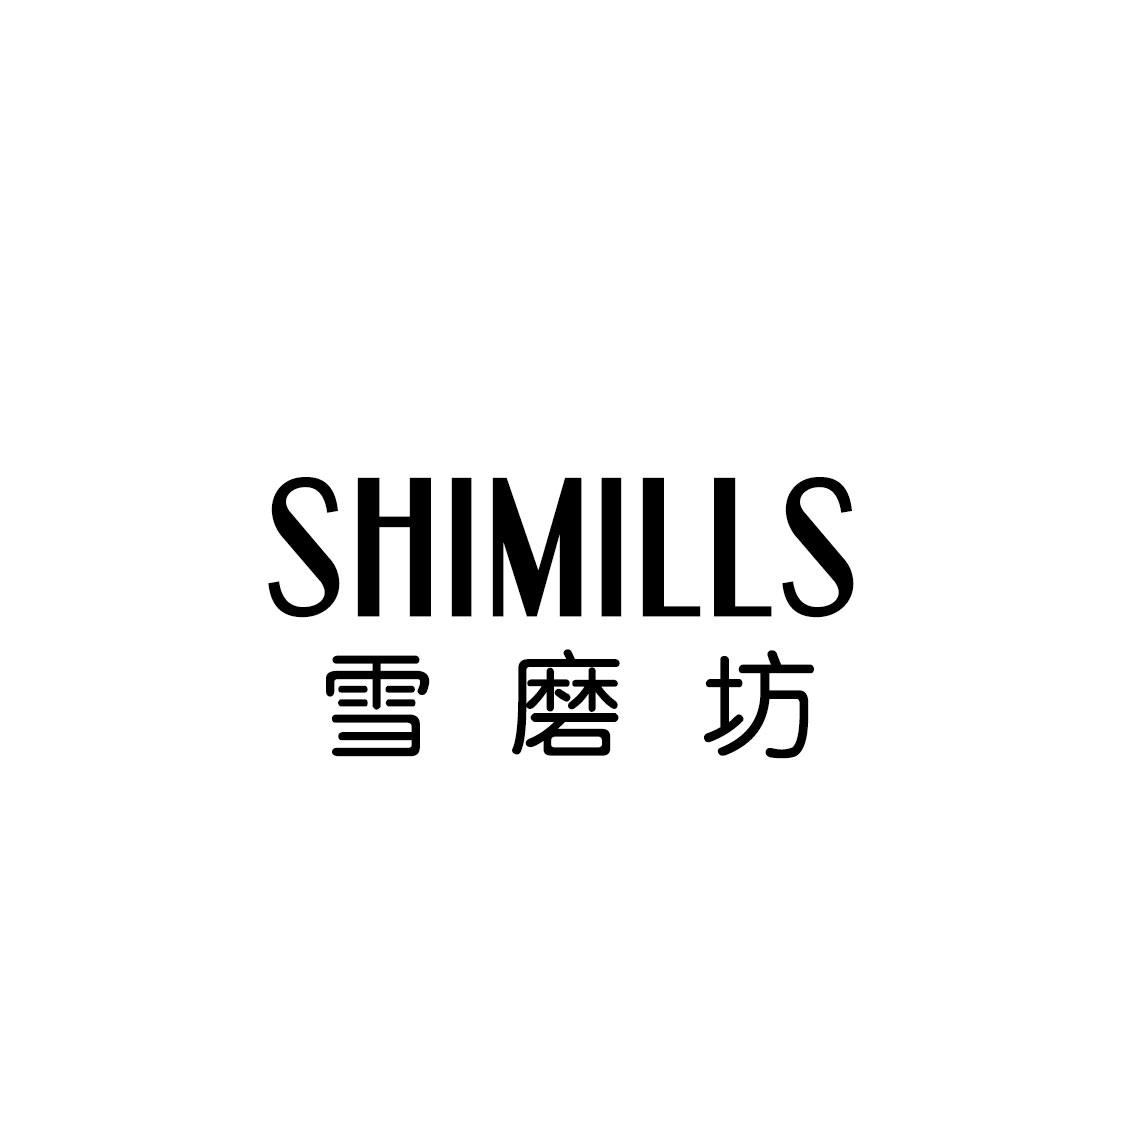 转让商标-雪磨坊 SHIMILLS